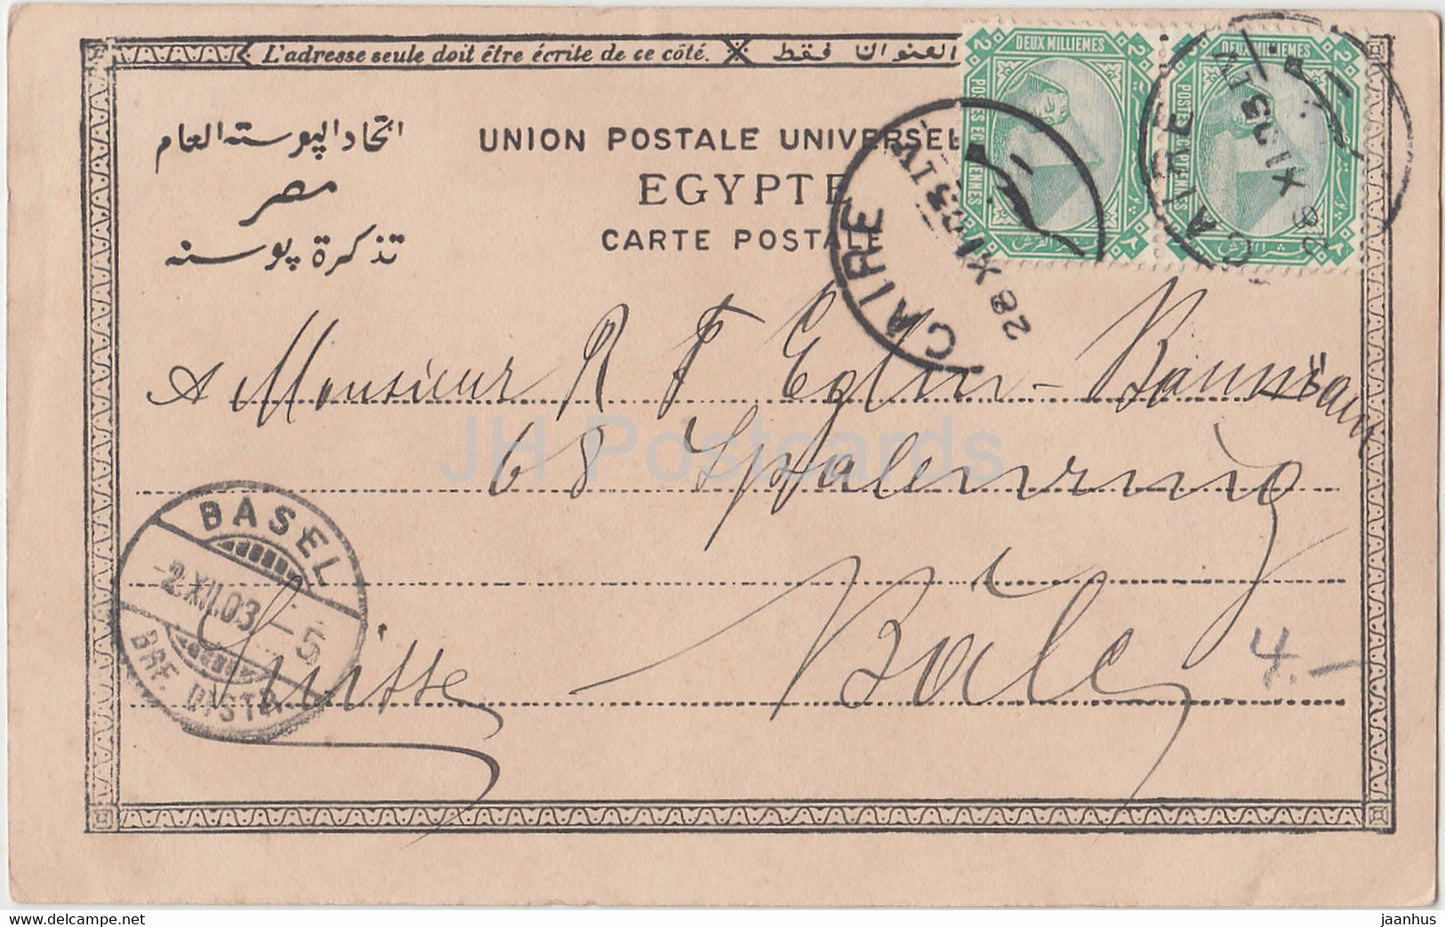 Phylae - Le Kiosk - ancient world - 323 - old postcard - 1903 - Egypt - used